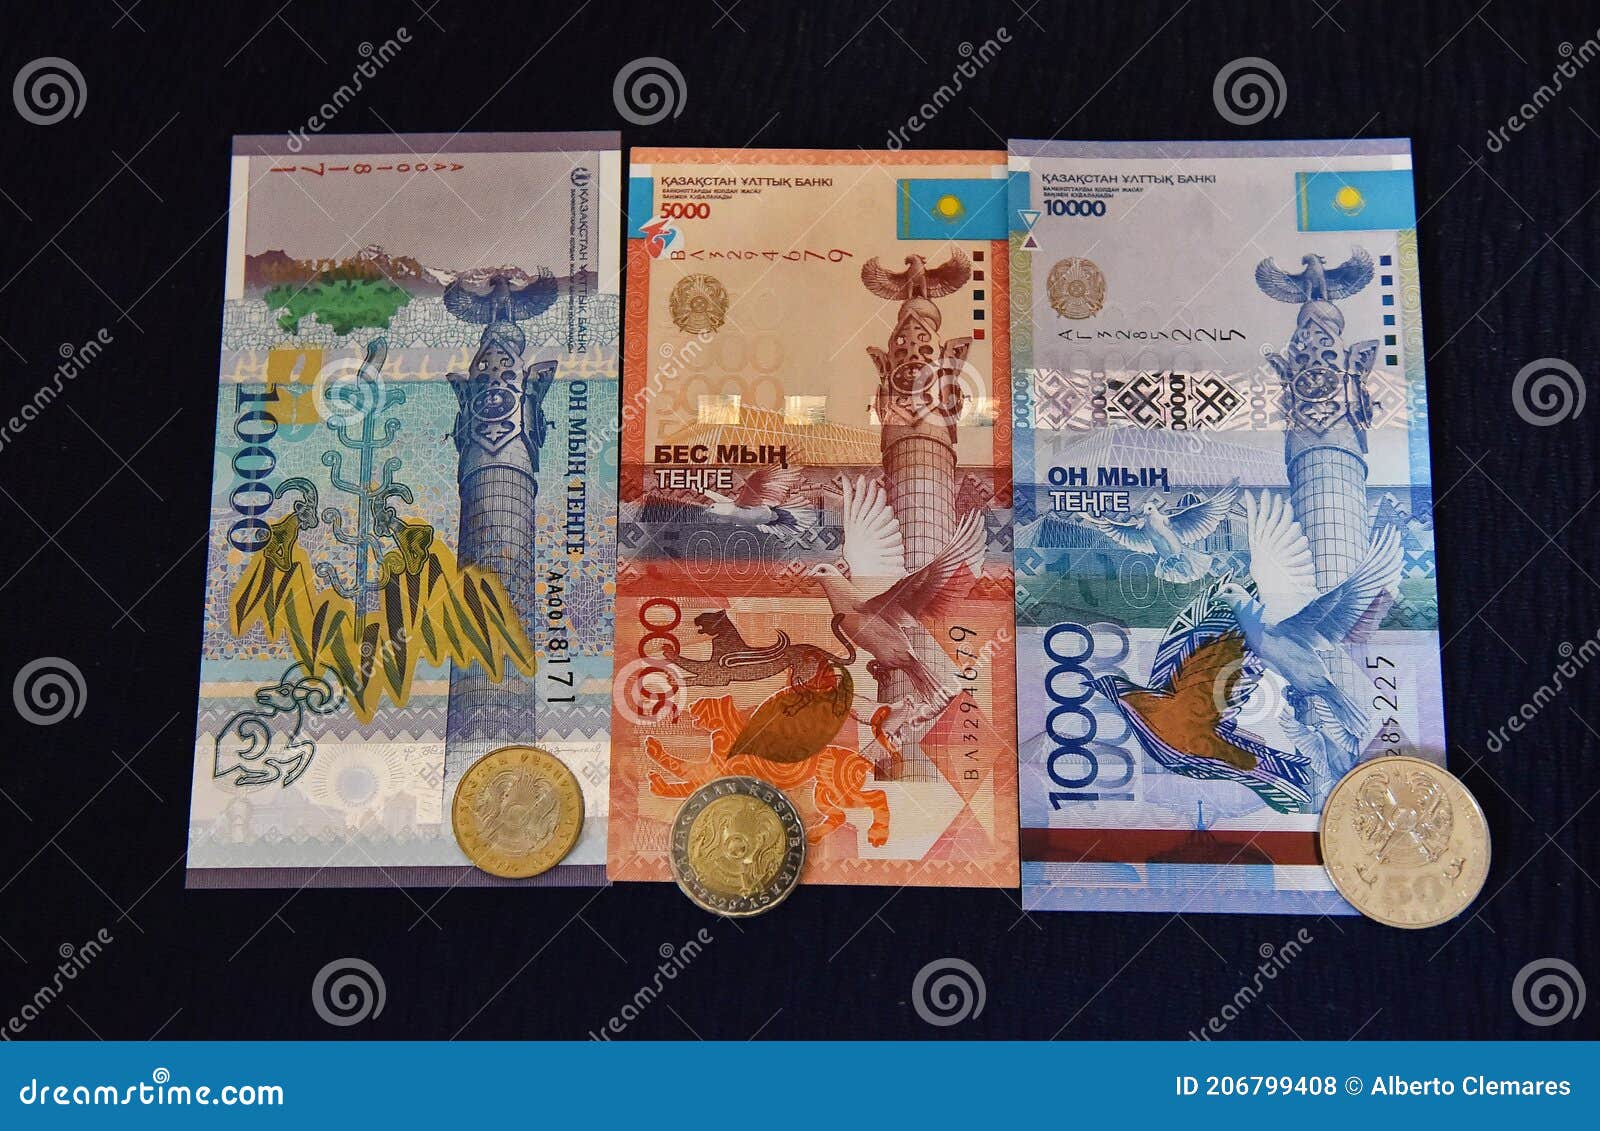 some tenge banknotes of kazakhstan